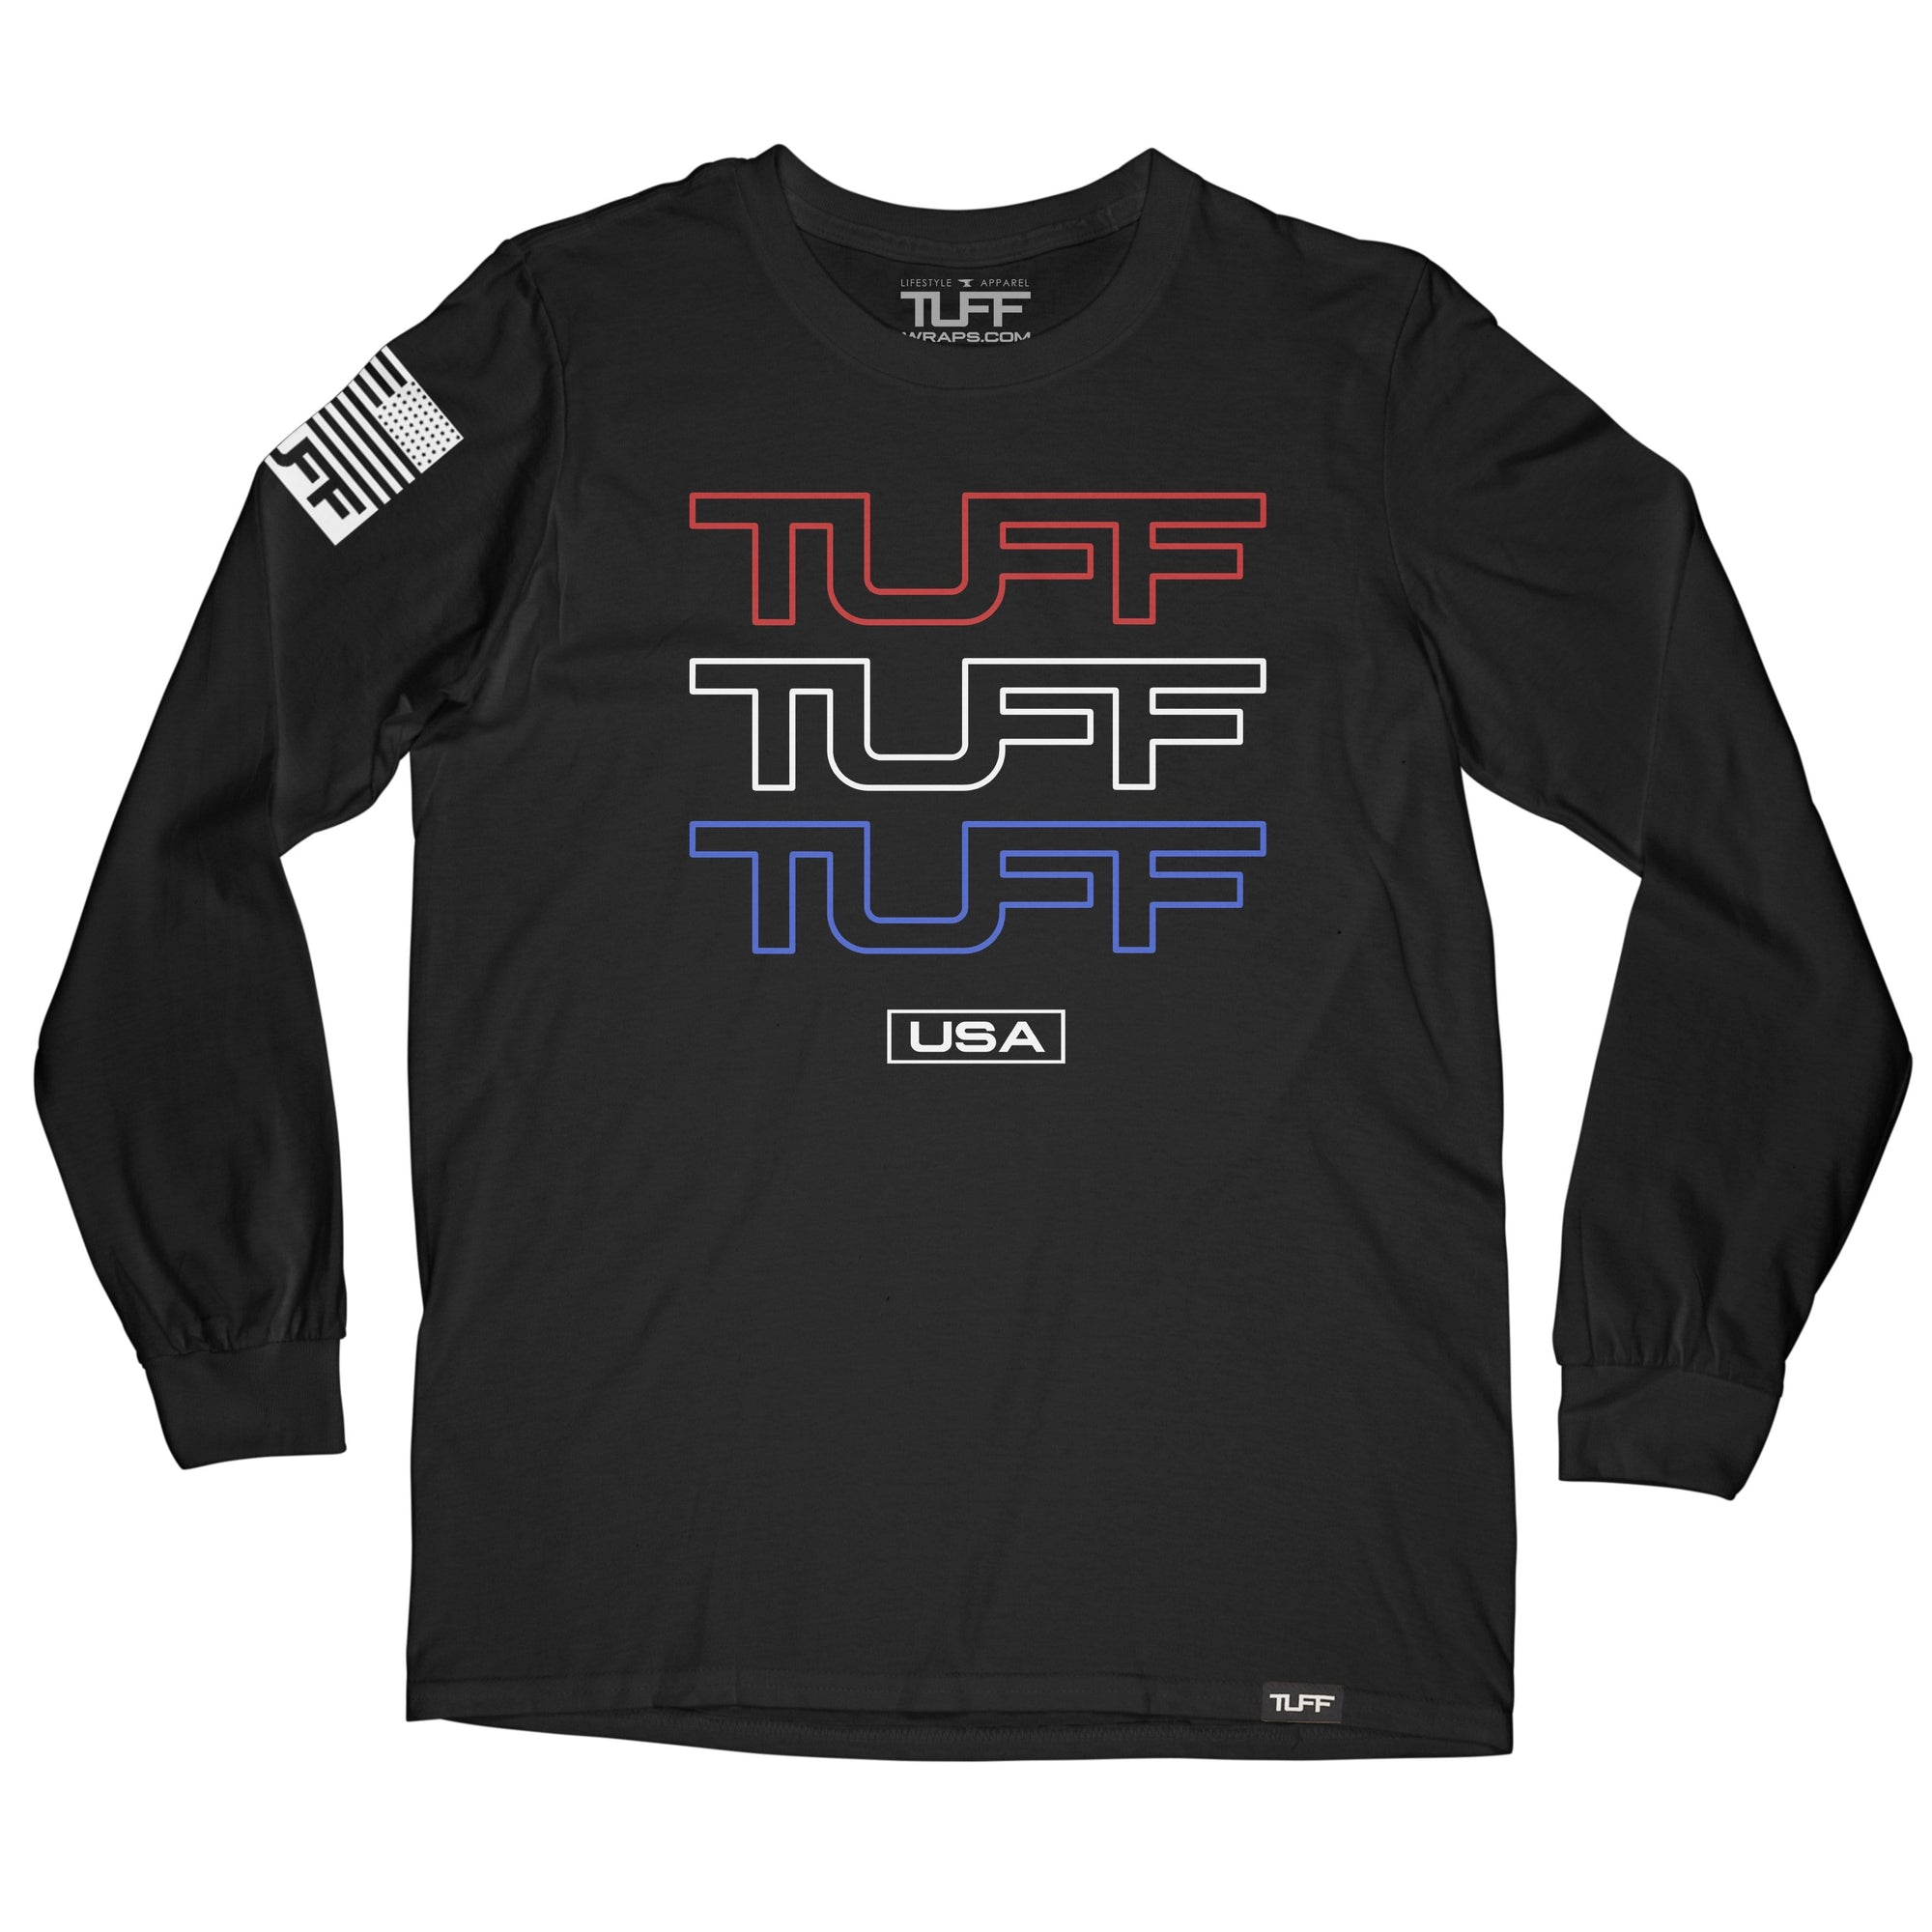 Triple TUFF USA Long Sleeve Tee Men's Long Sleeve T-Shirt